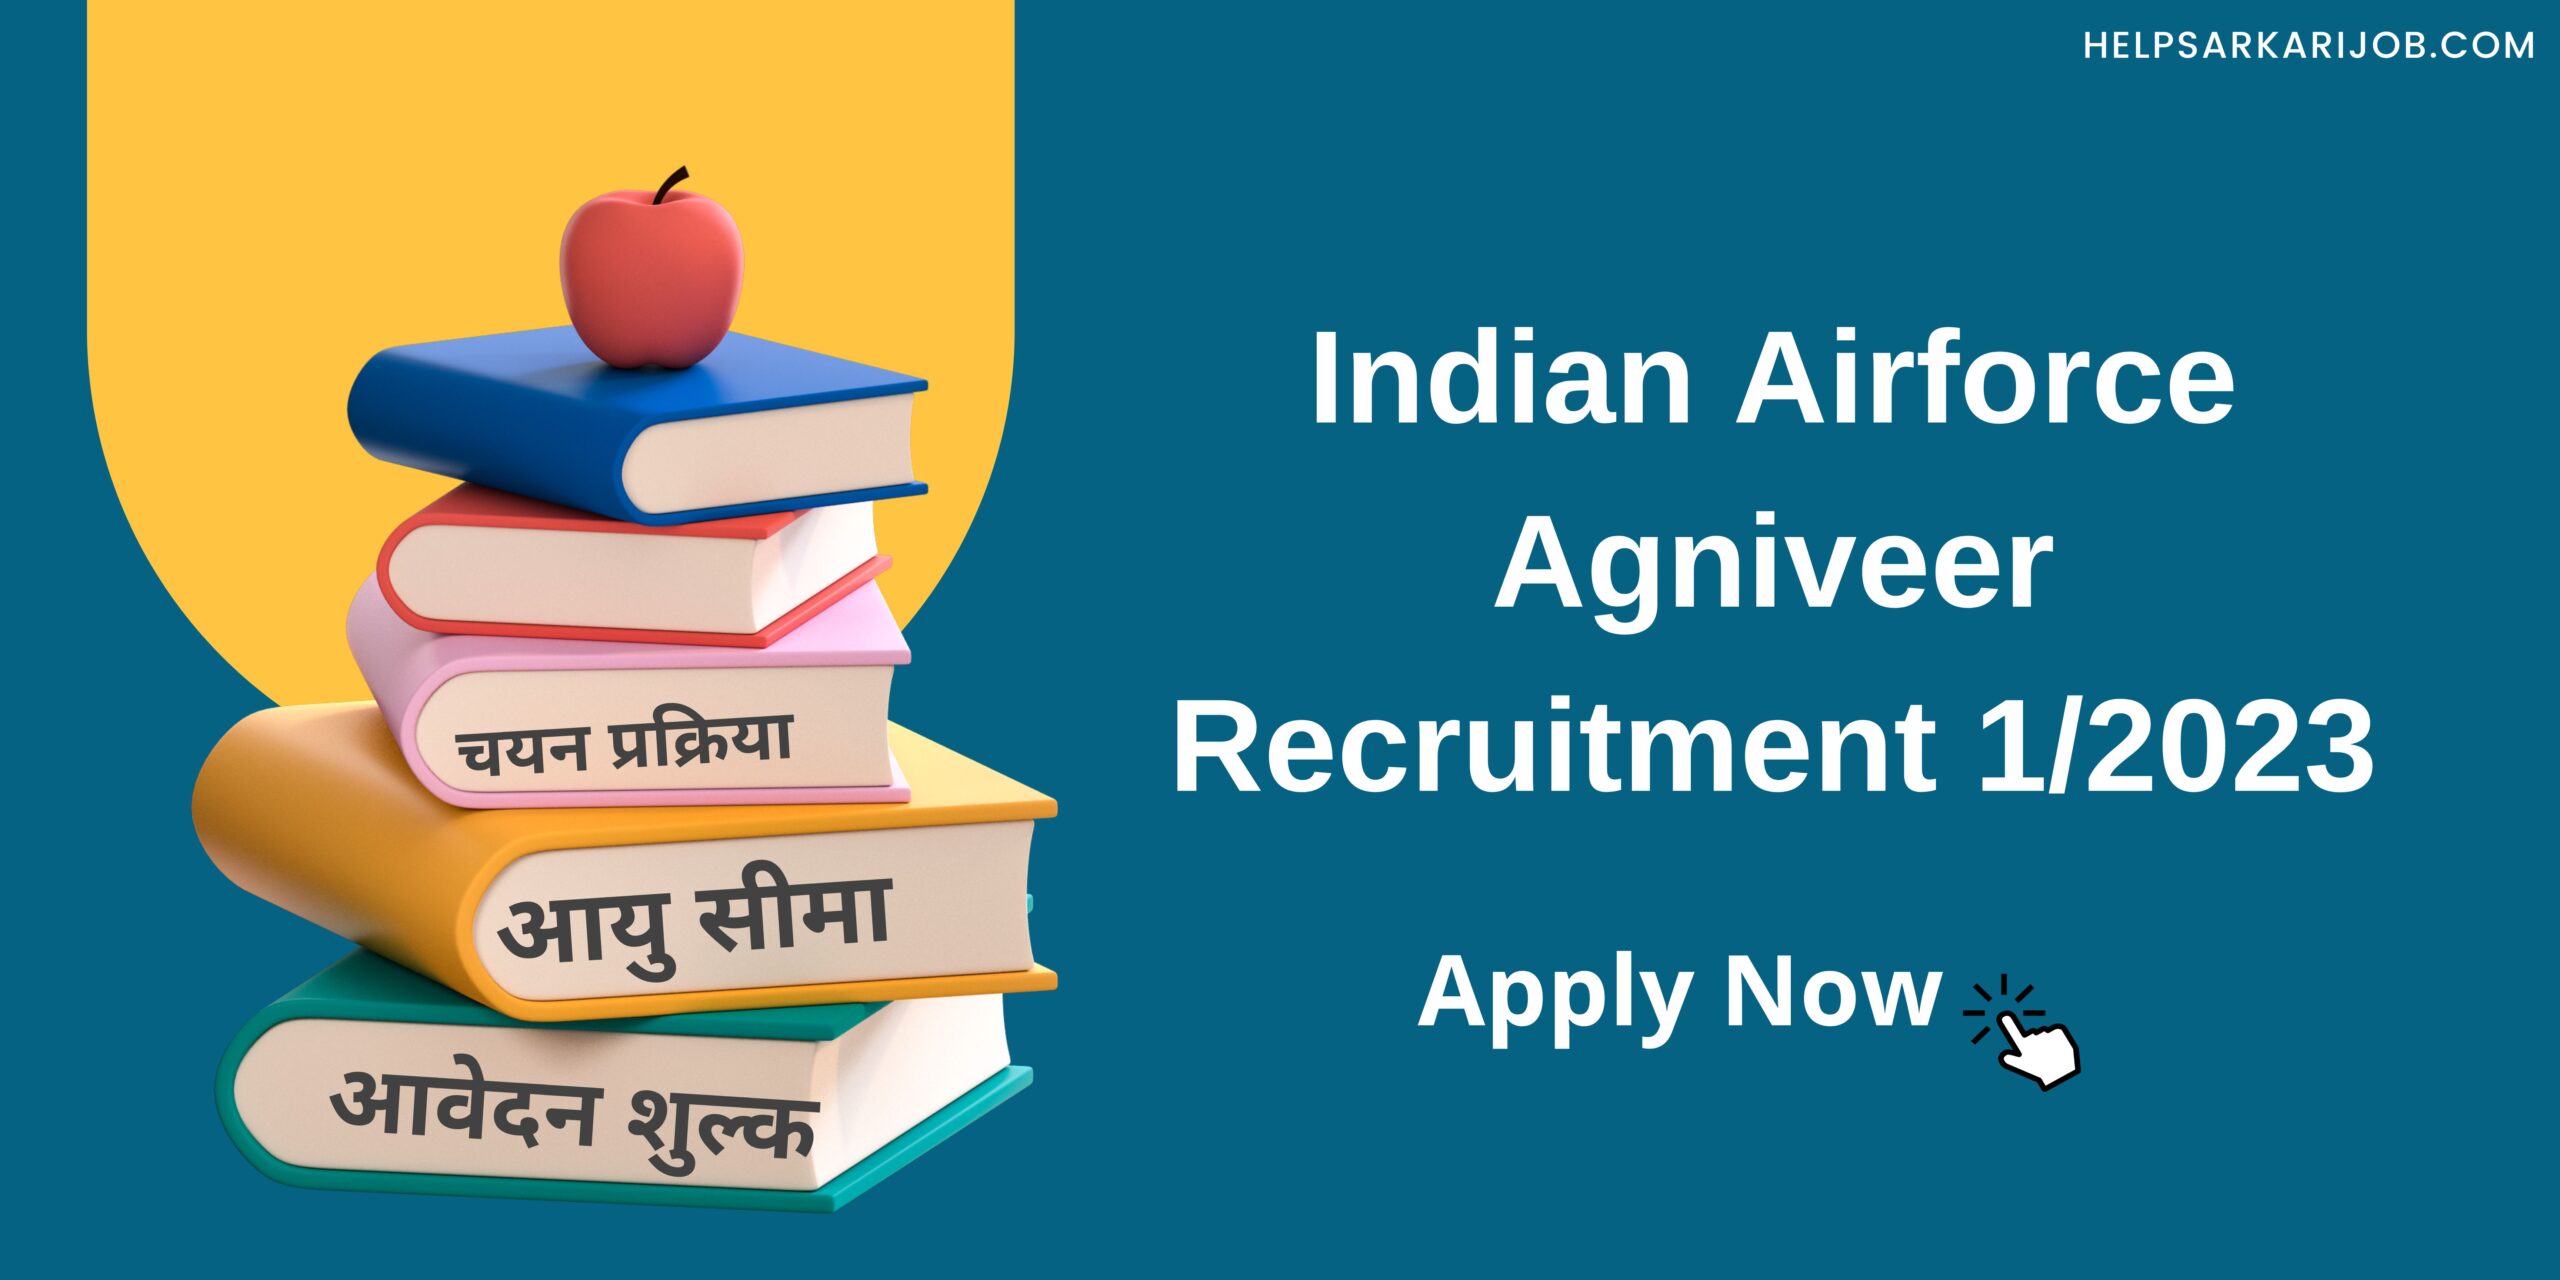 Indian Airforce Agniveer Recruitment 12023